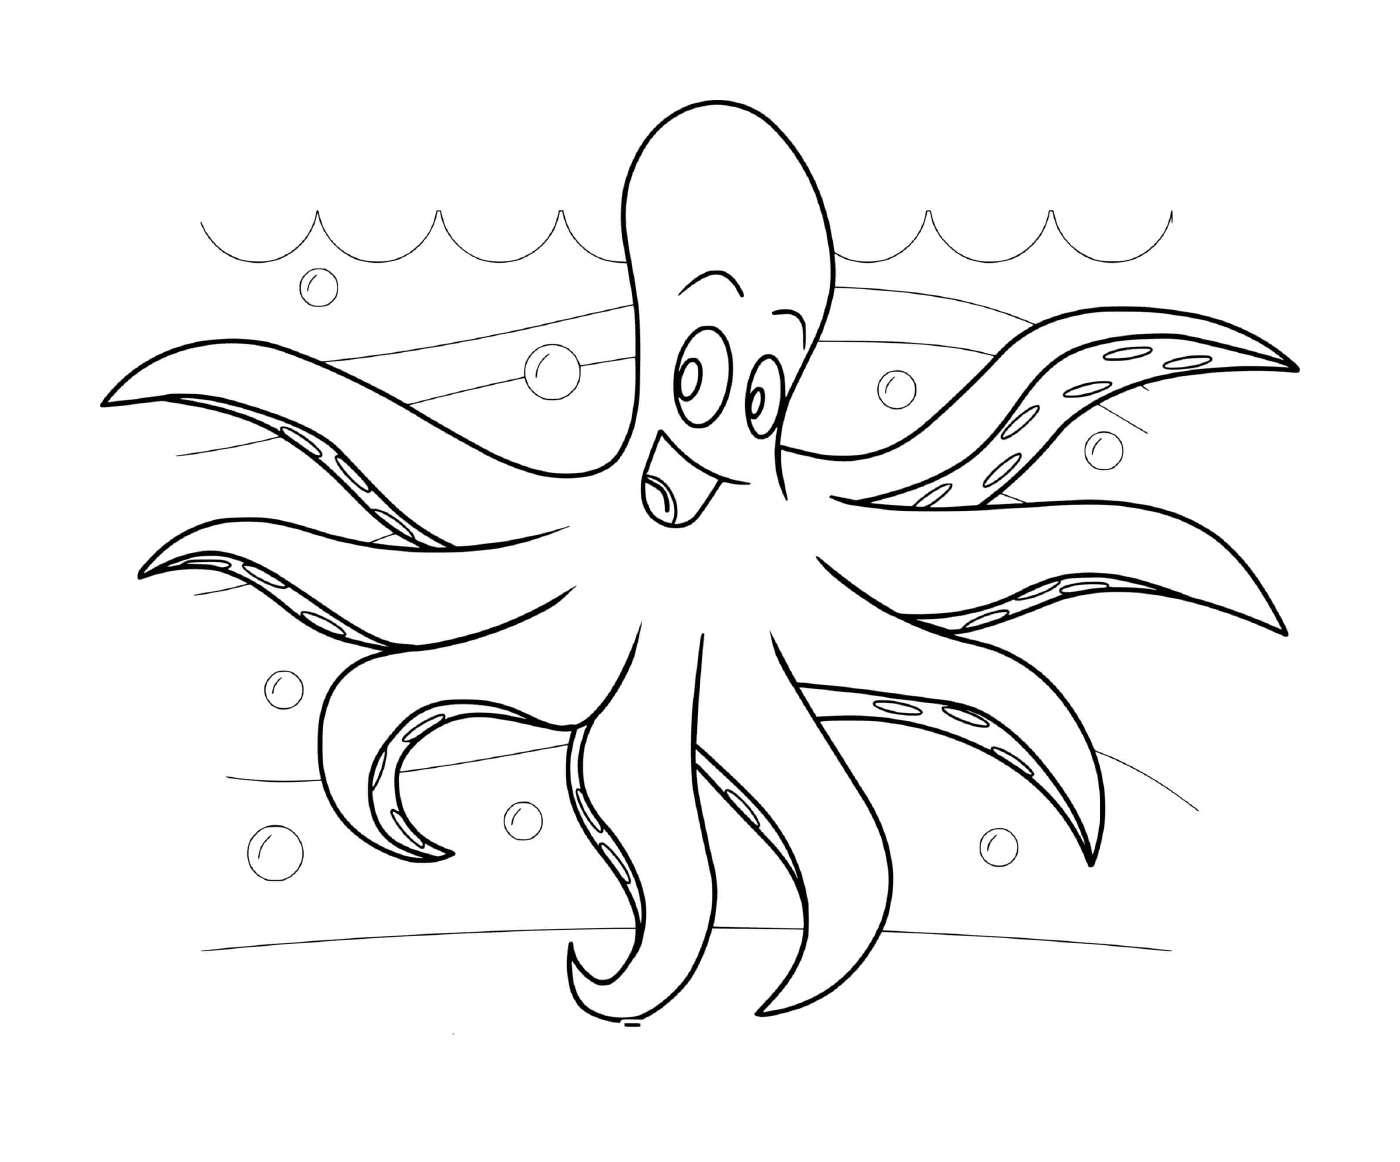  an octopus in the ocean 